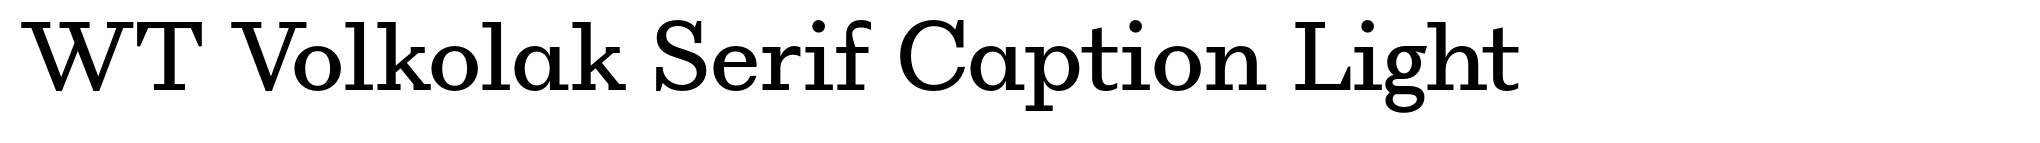 WT Volkolak Serif Caption Light image